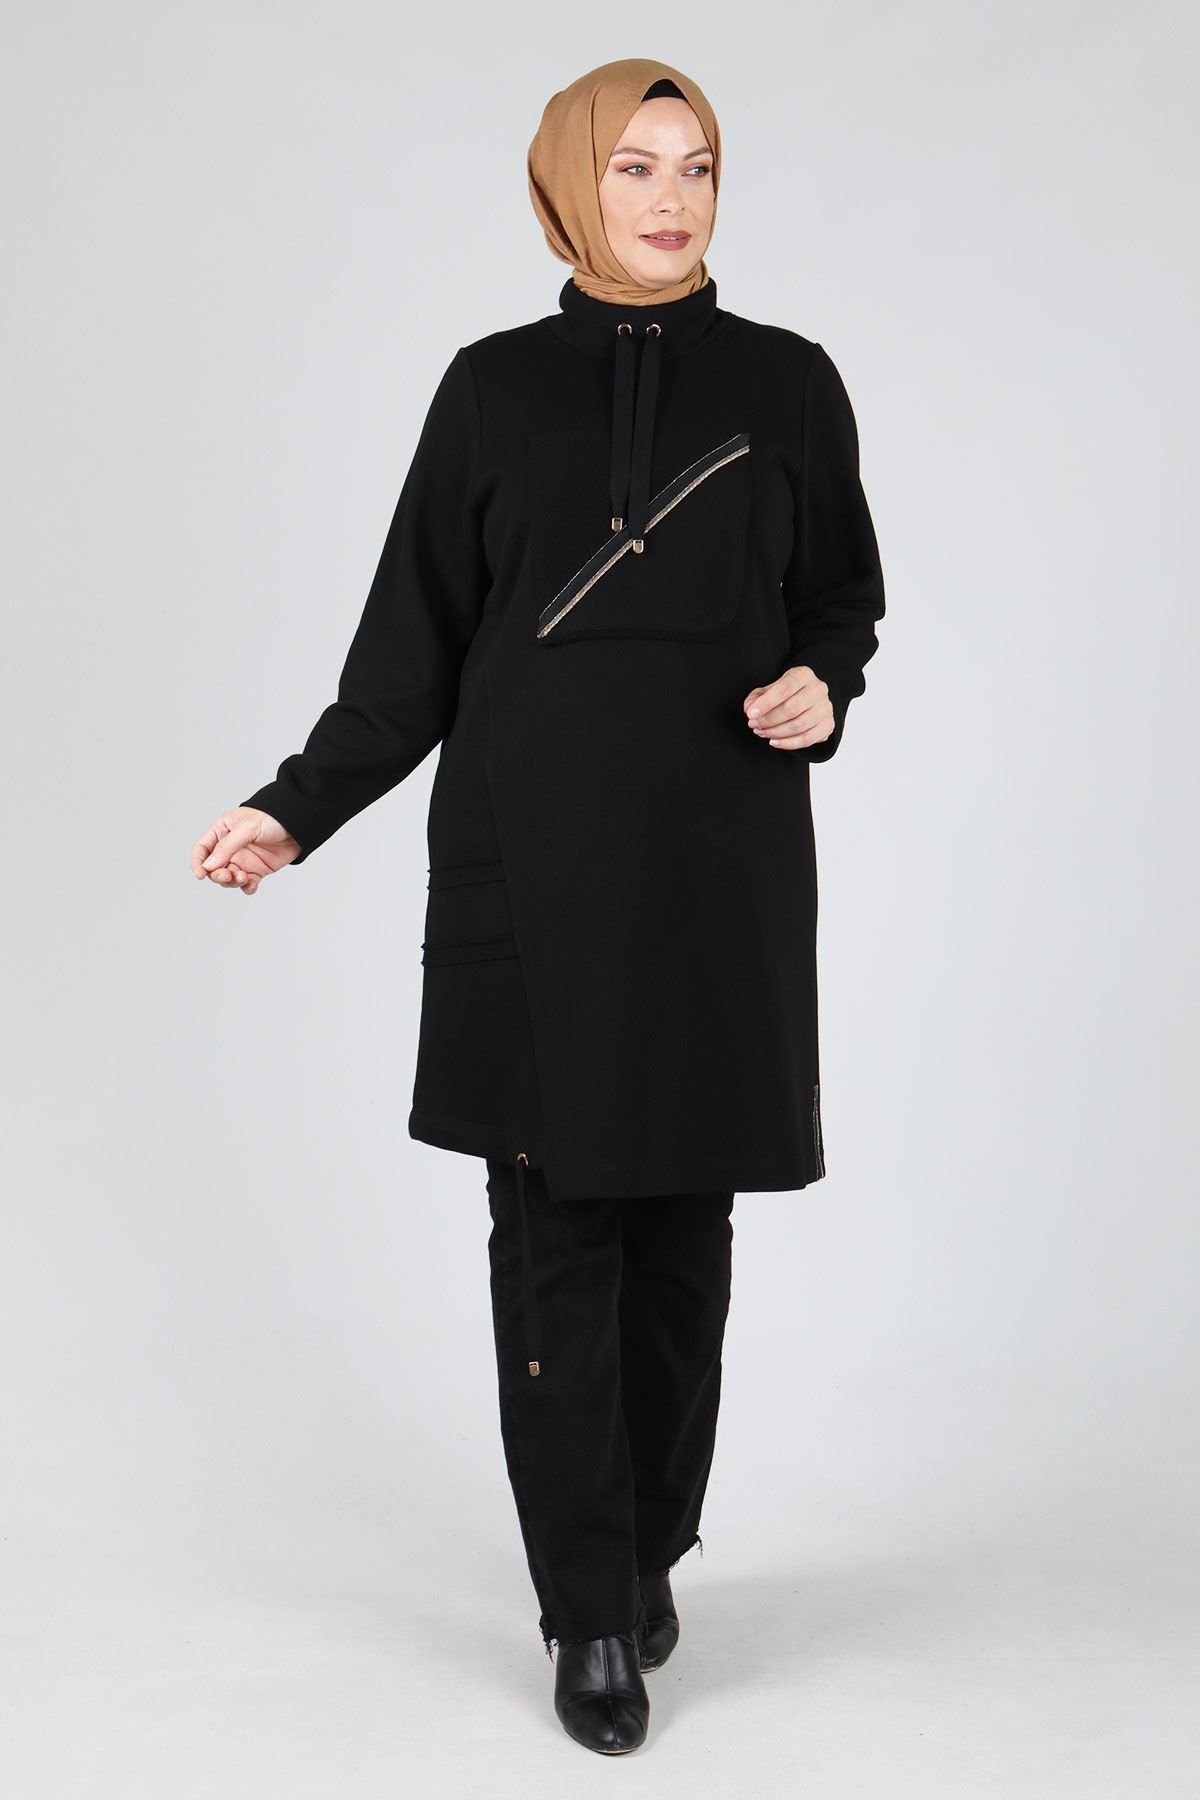 ottoman wear Otw20094 Üç Iplik Tunik Siyah